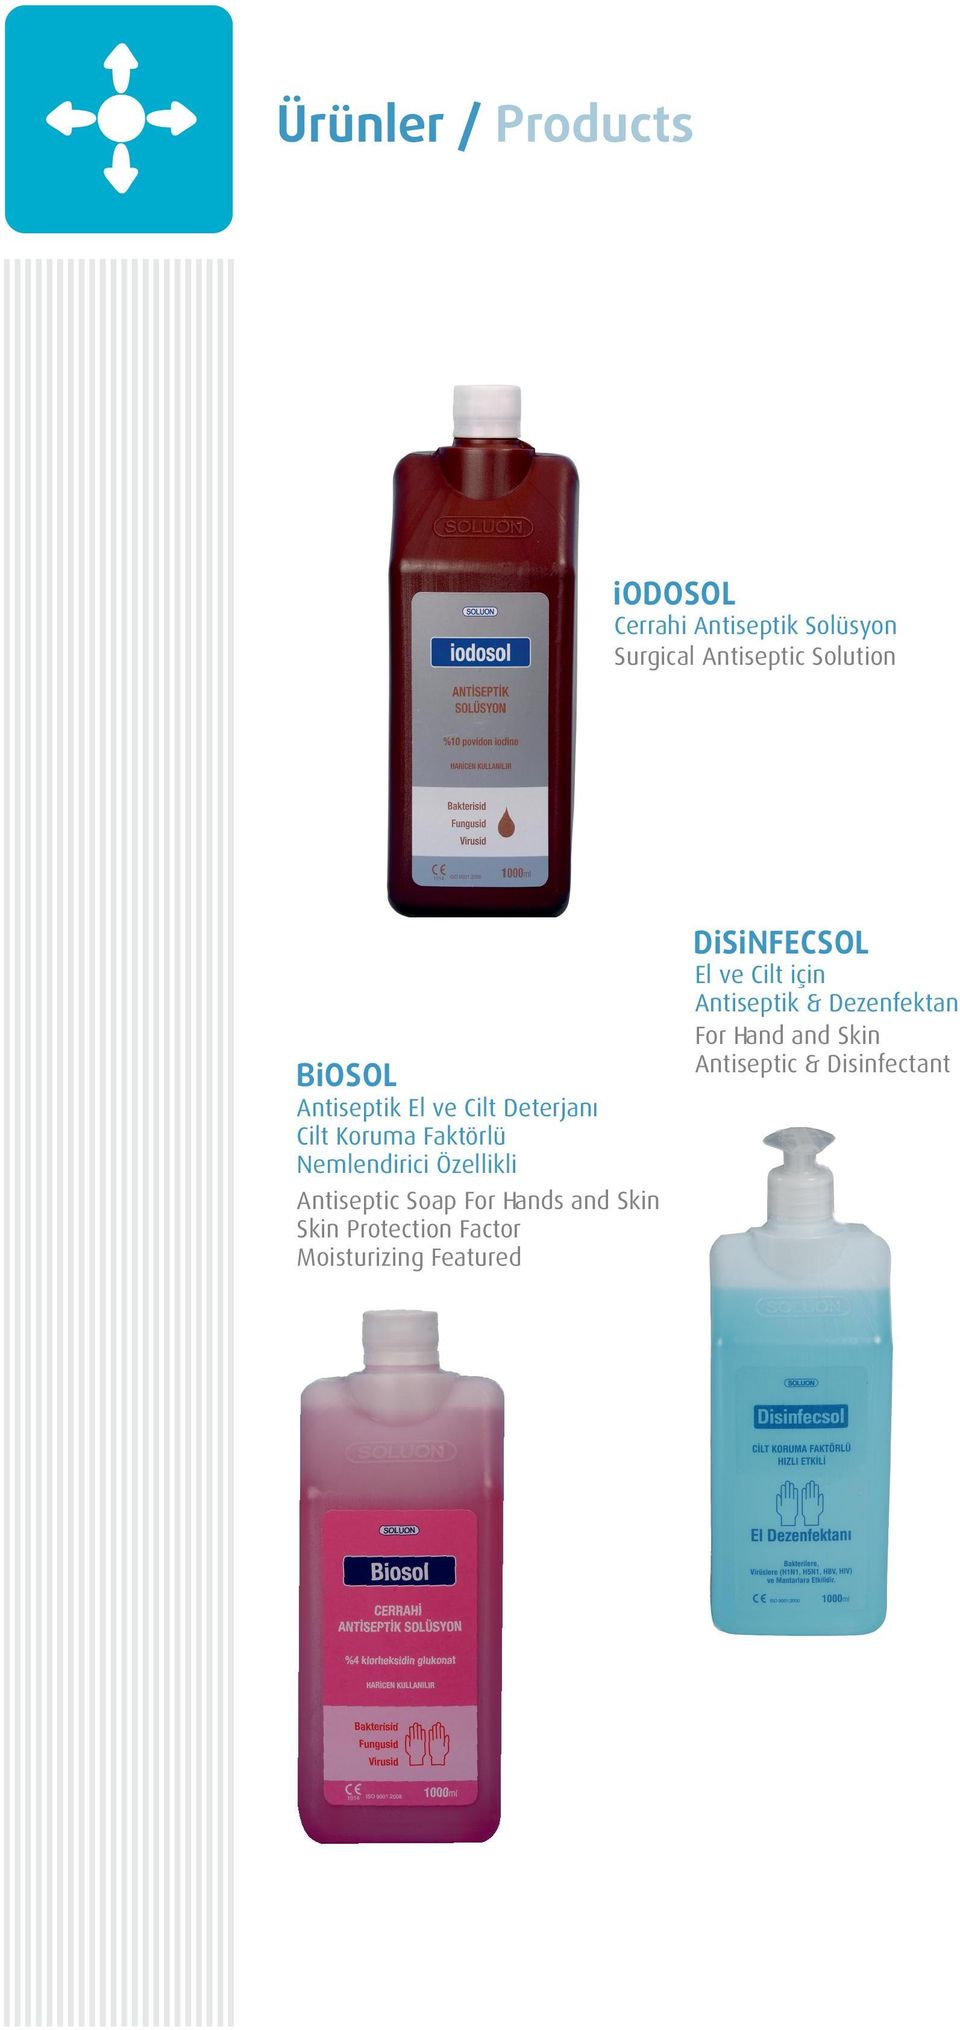 Özellikli Antiseptic Soap For Hands and Skin Skin Protection Factor Moisturizing